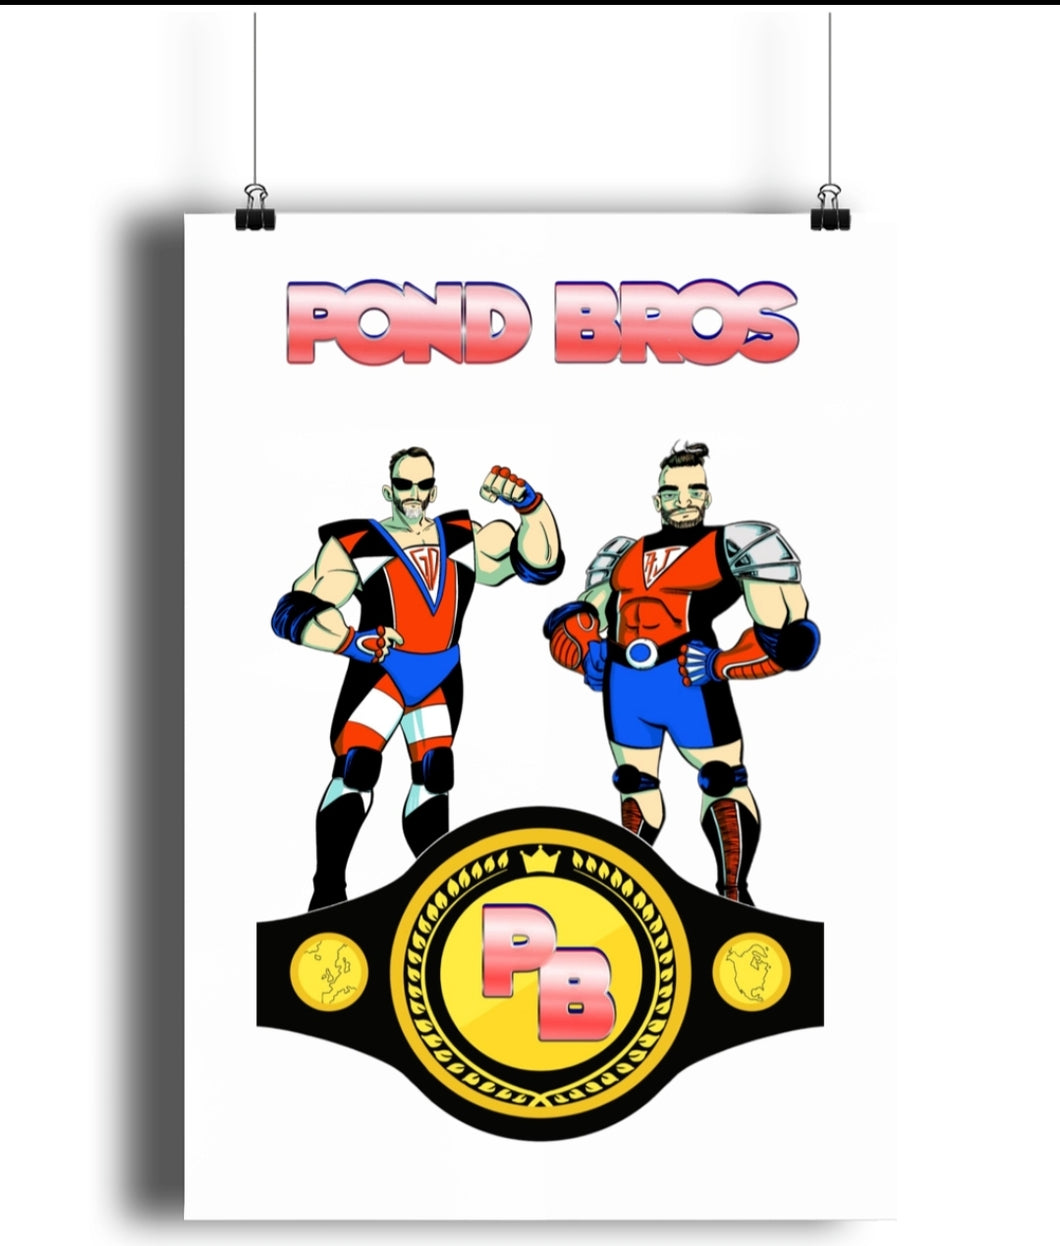 Pond Bros Promo Poster